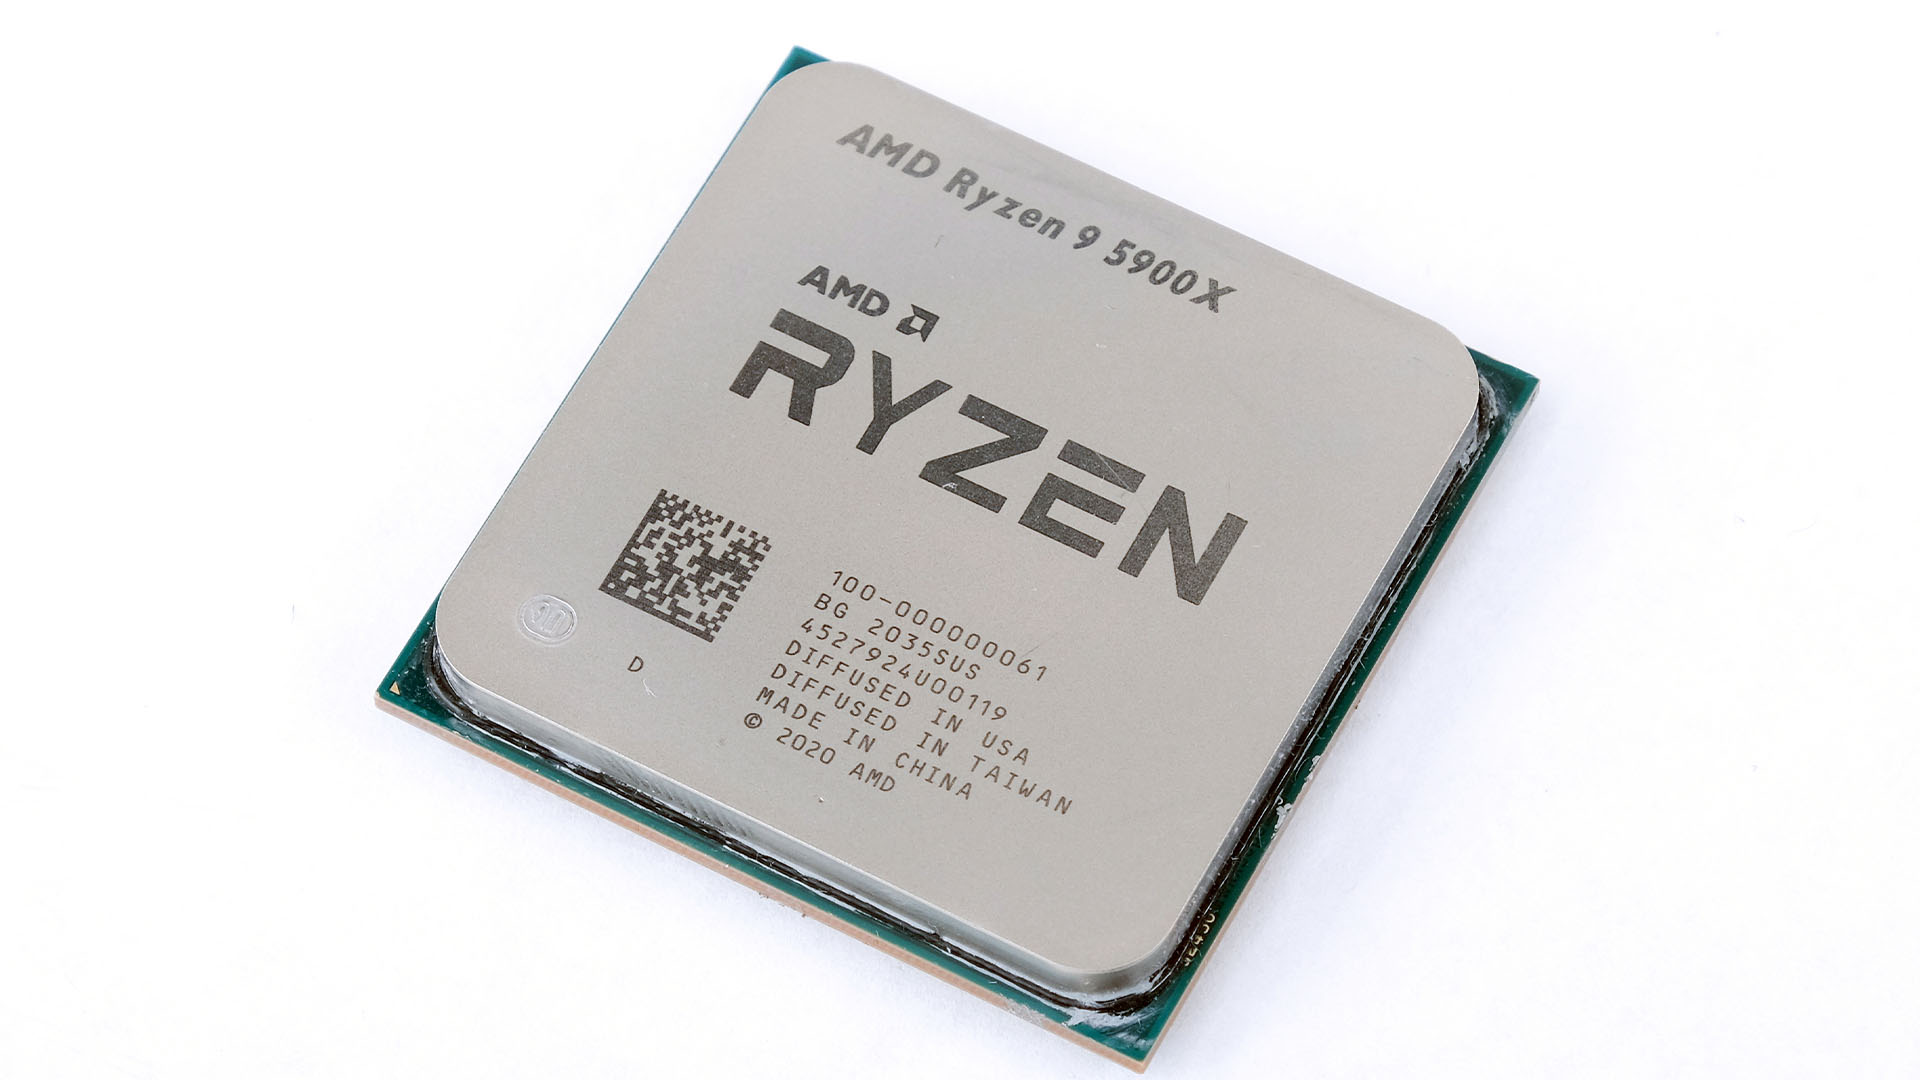 Ryzen9 5900X